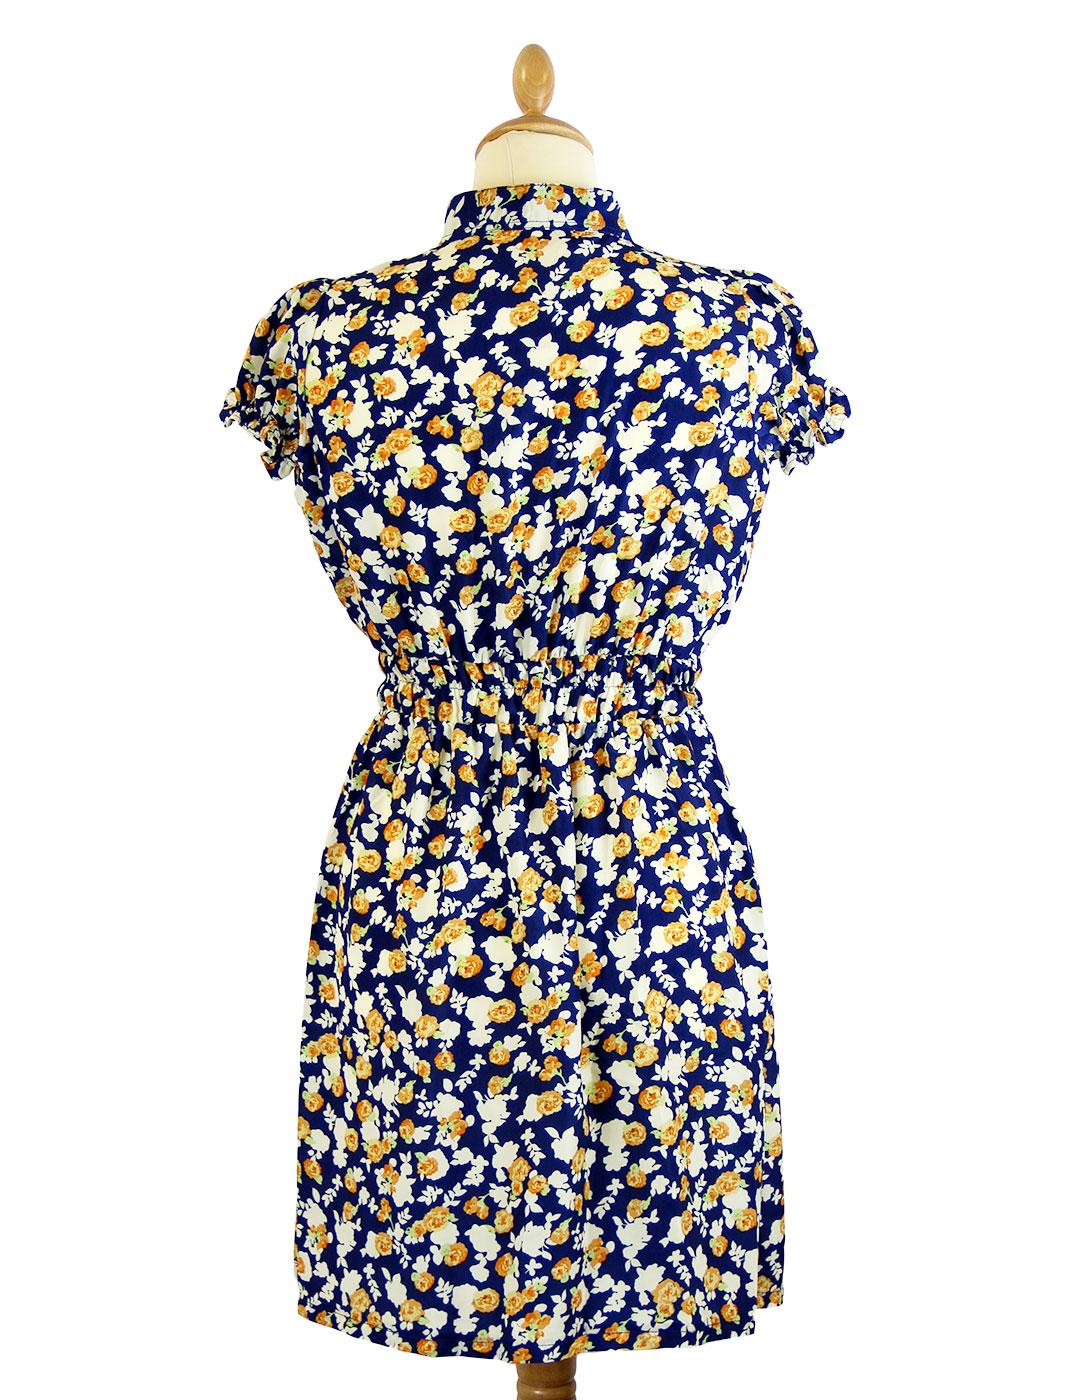 Lovestruck 'Deirdre' Retro Vintage style Tea Dress in Blue Floral